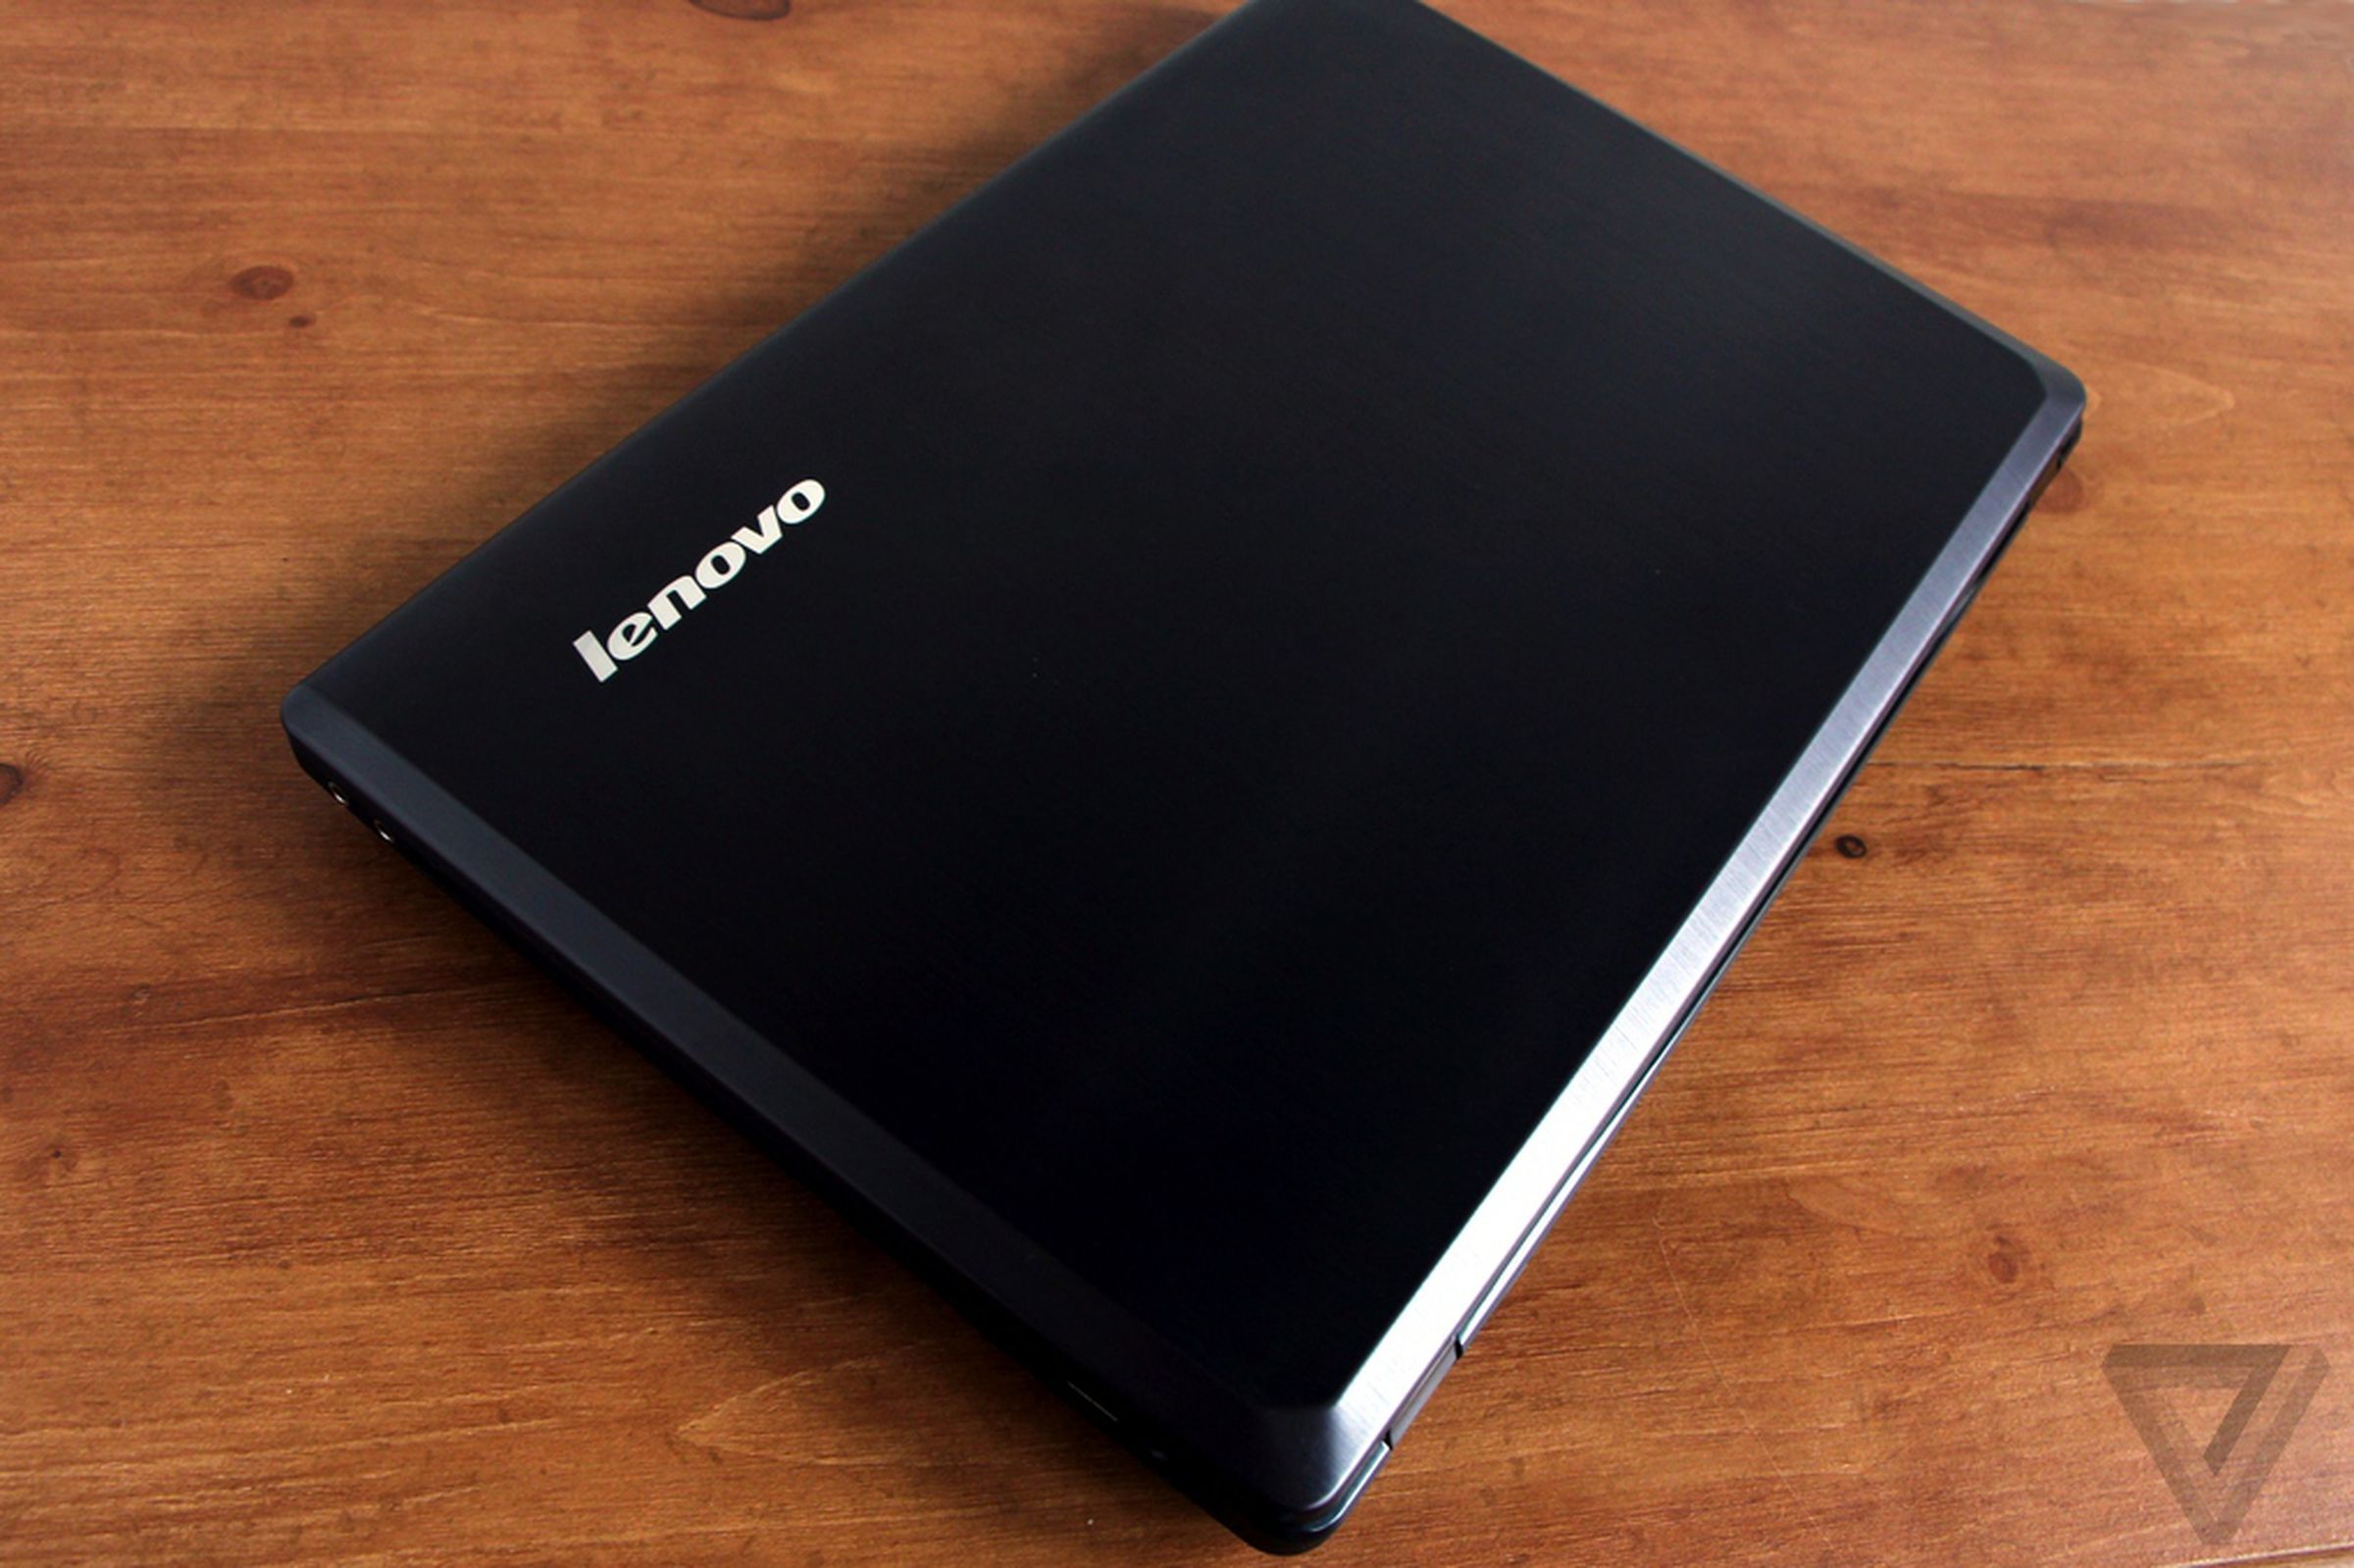 Lenovo Ideapad Y580 review photos